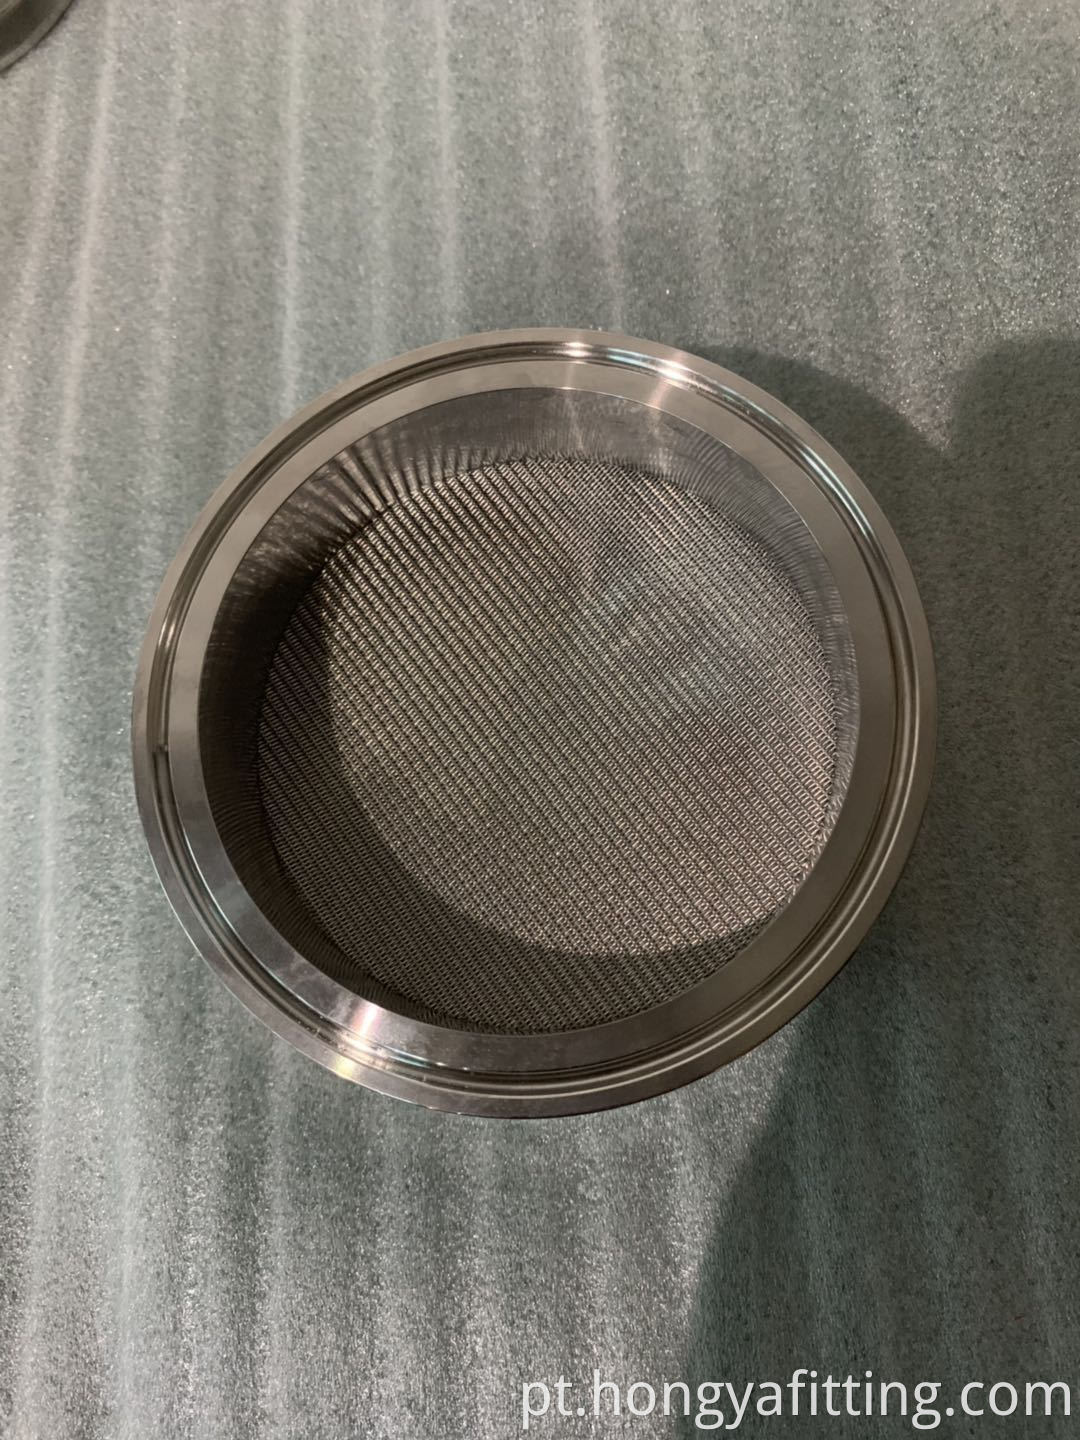 Stainless Steel Powder Sintered Filter Disc